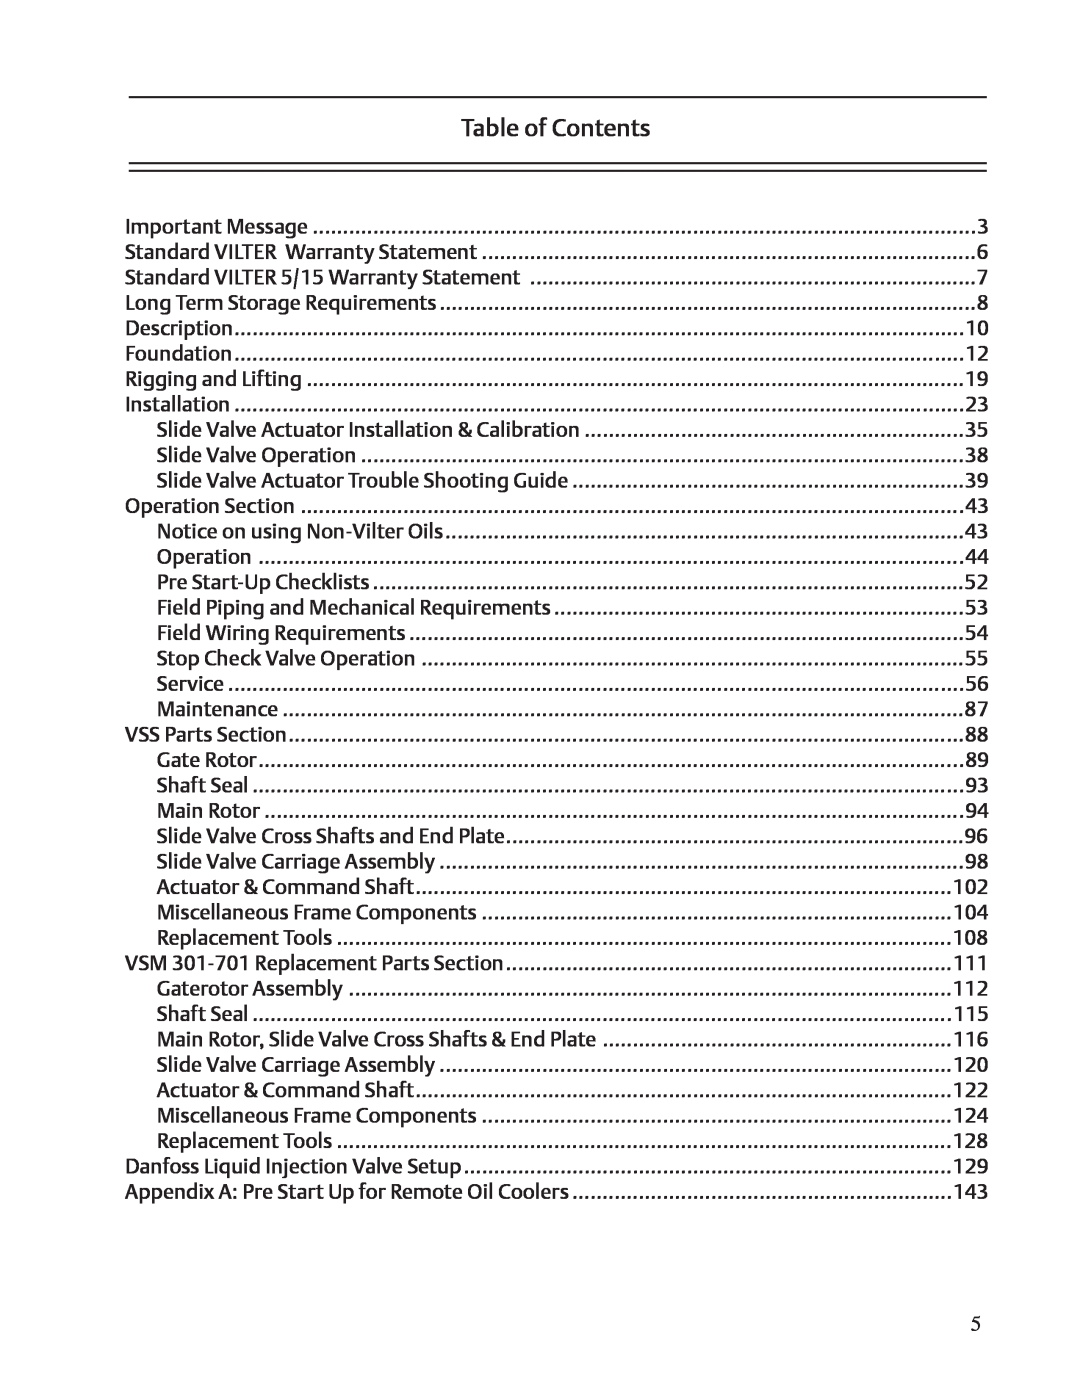 Emerson VSS, VSR, VSM service manual Table of Contents 